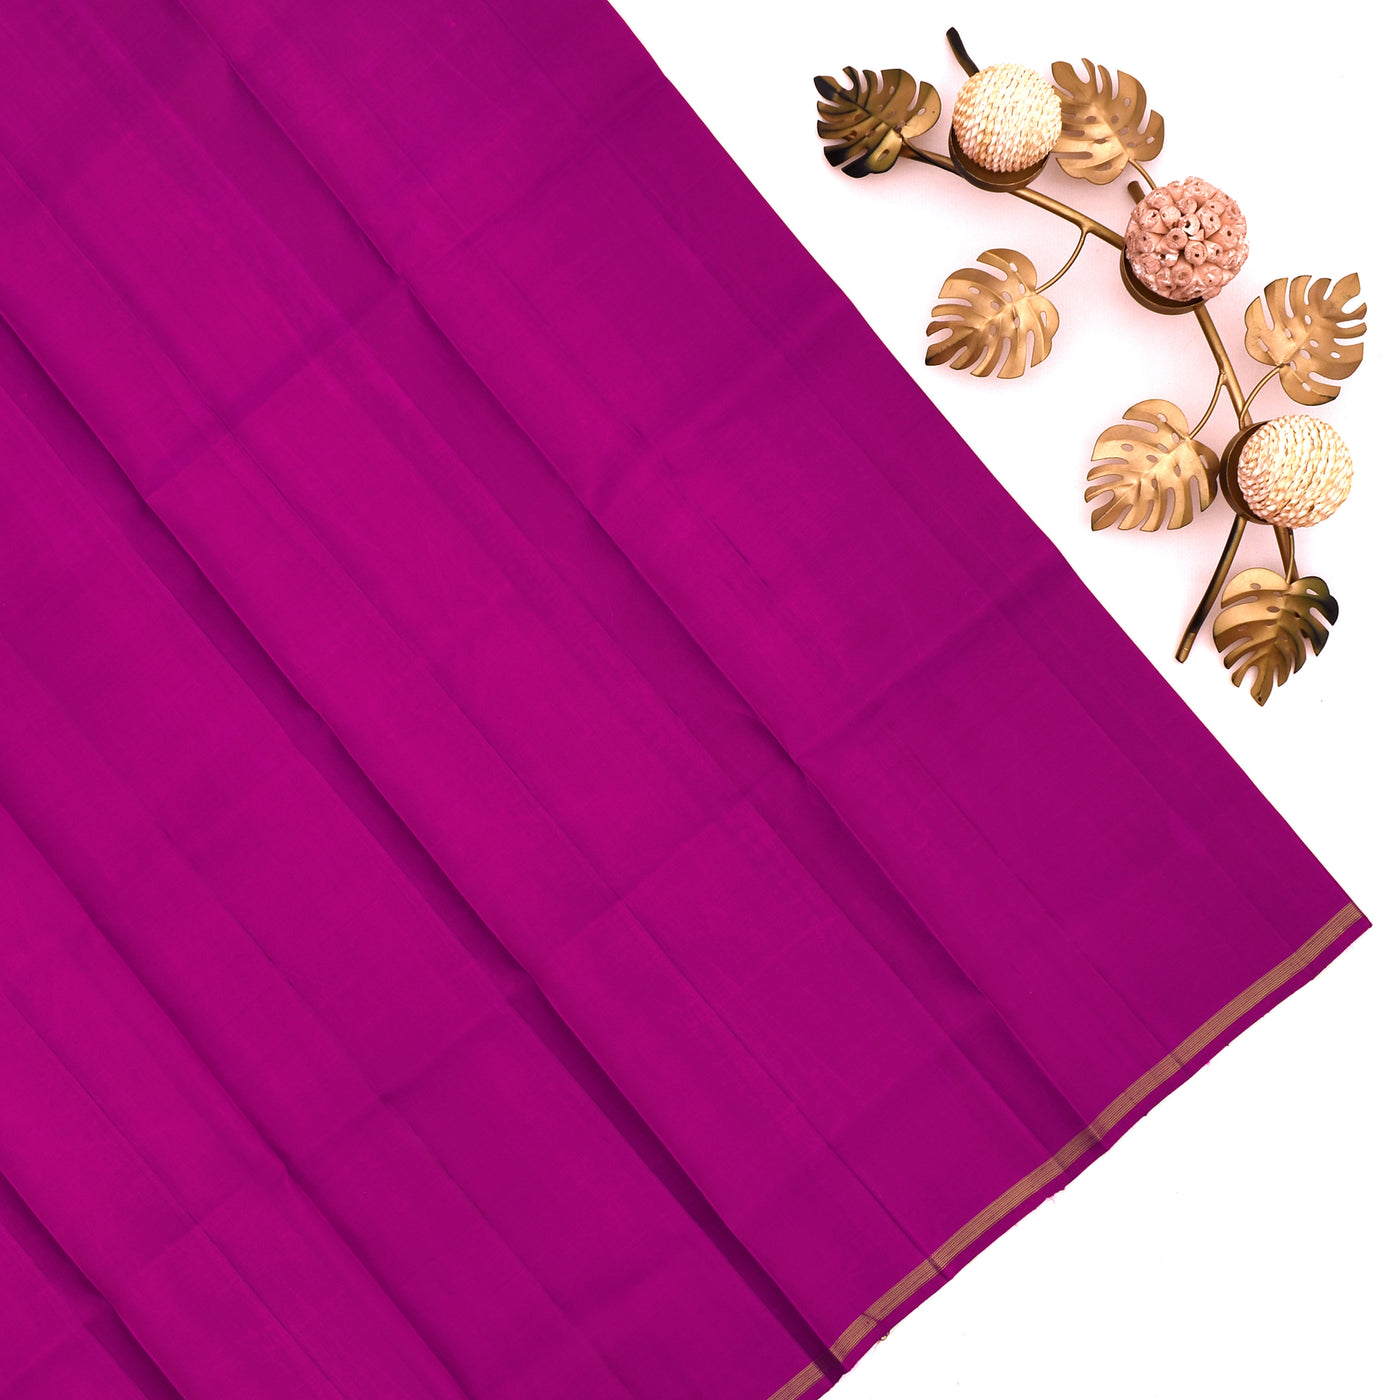 Violet Printed Kanchipuram Silk Saree with Big Flower Printed Design